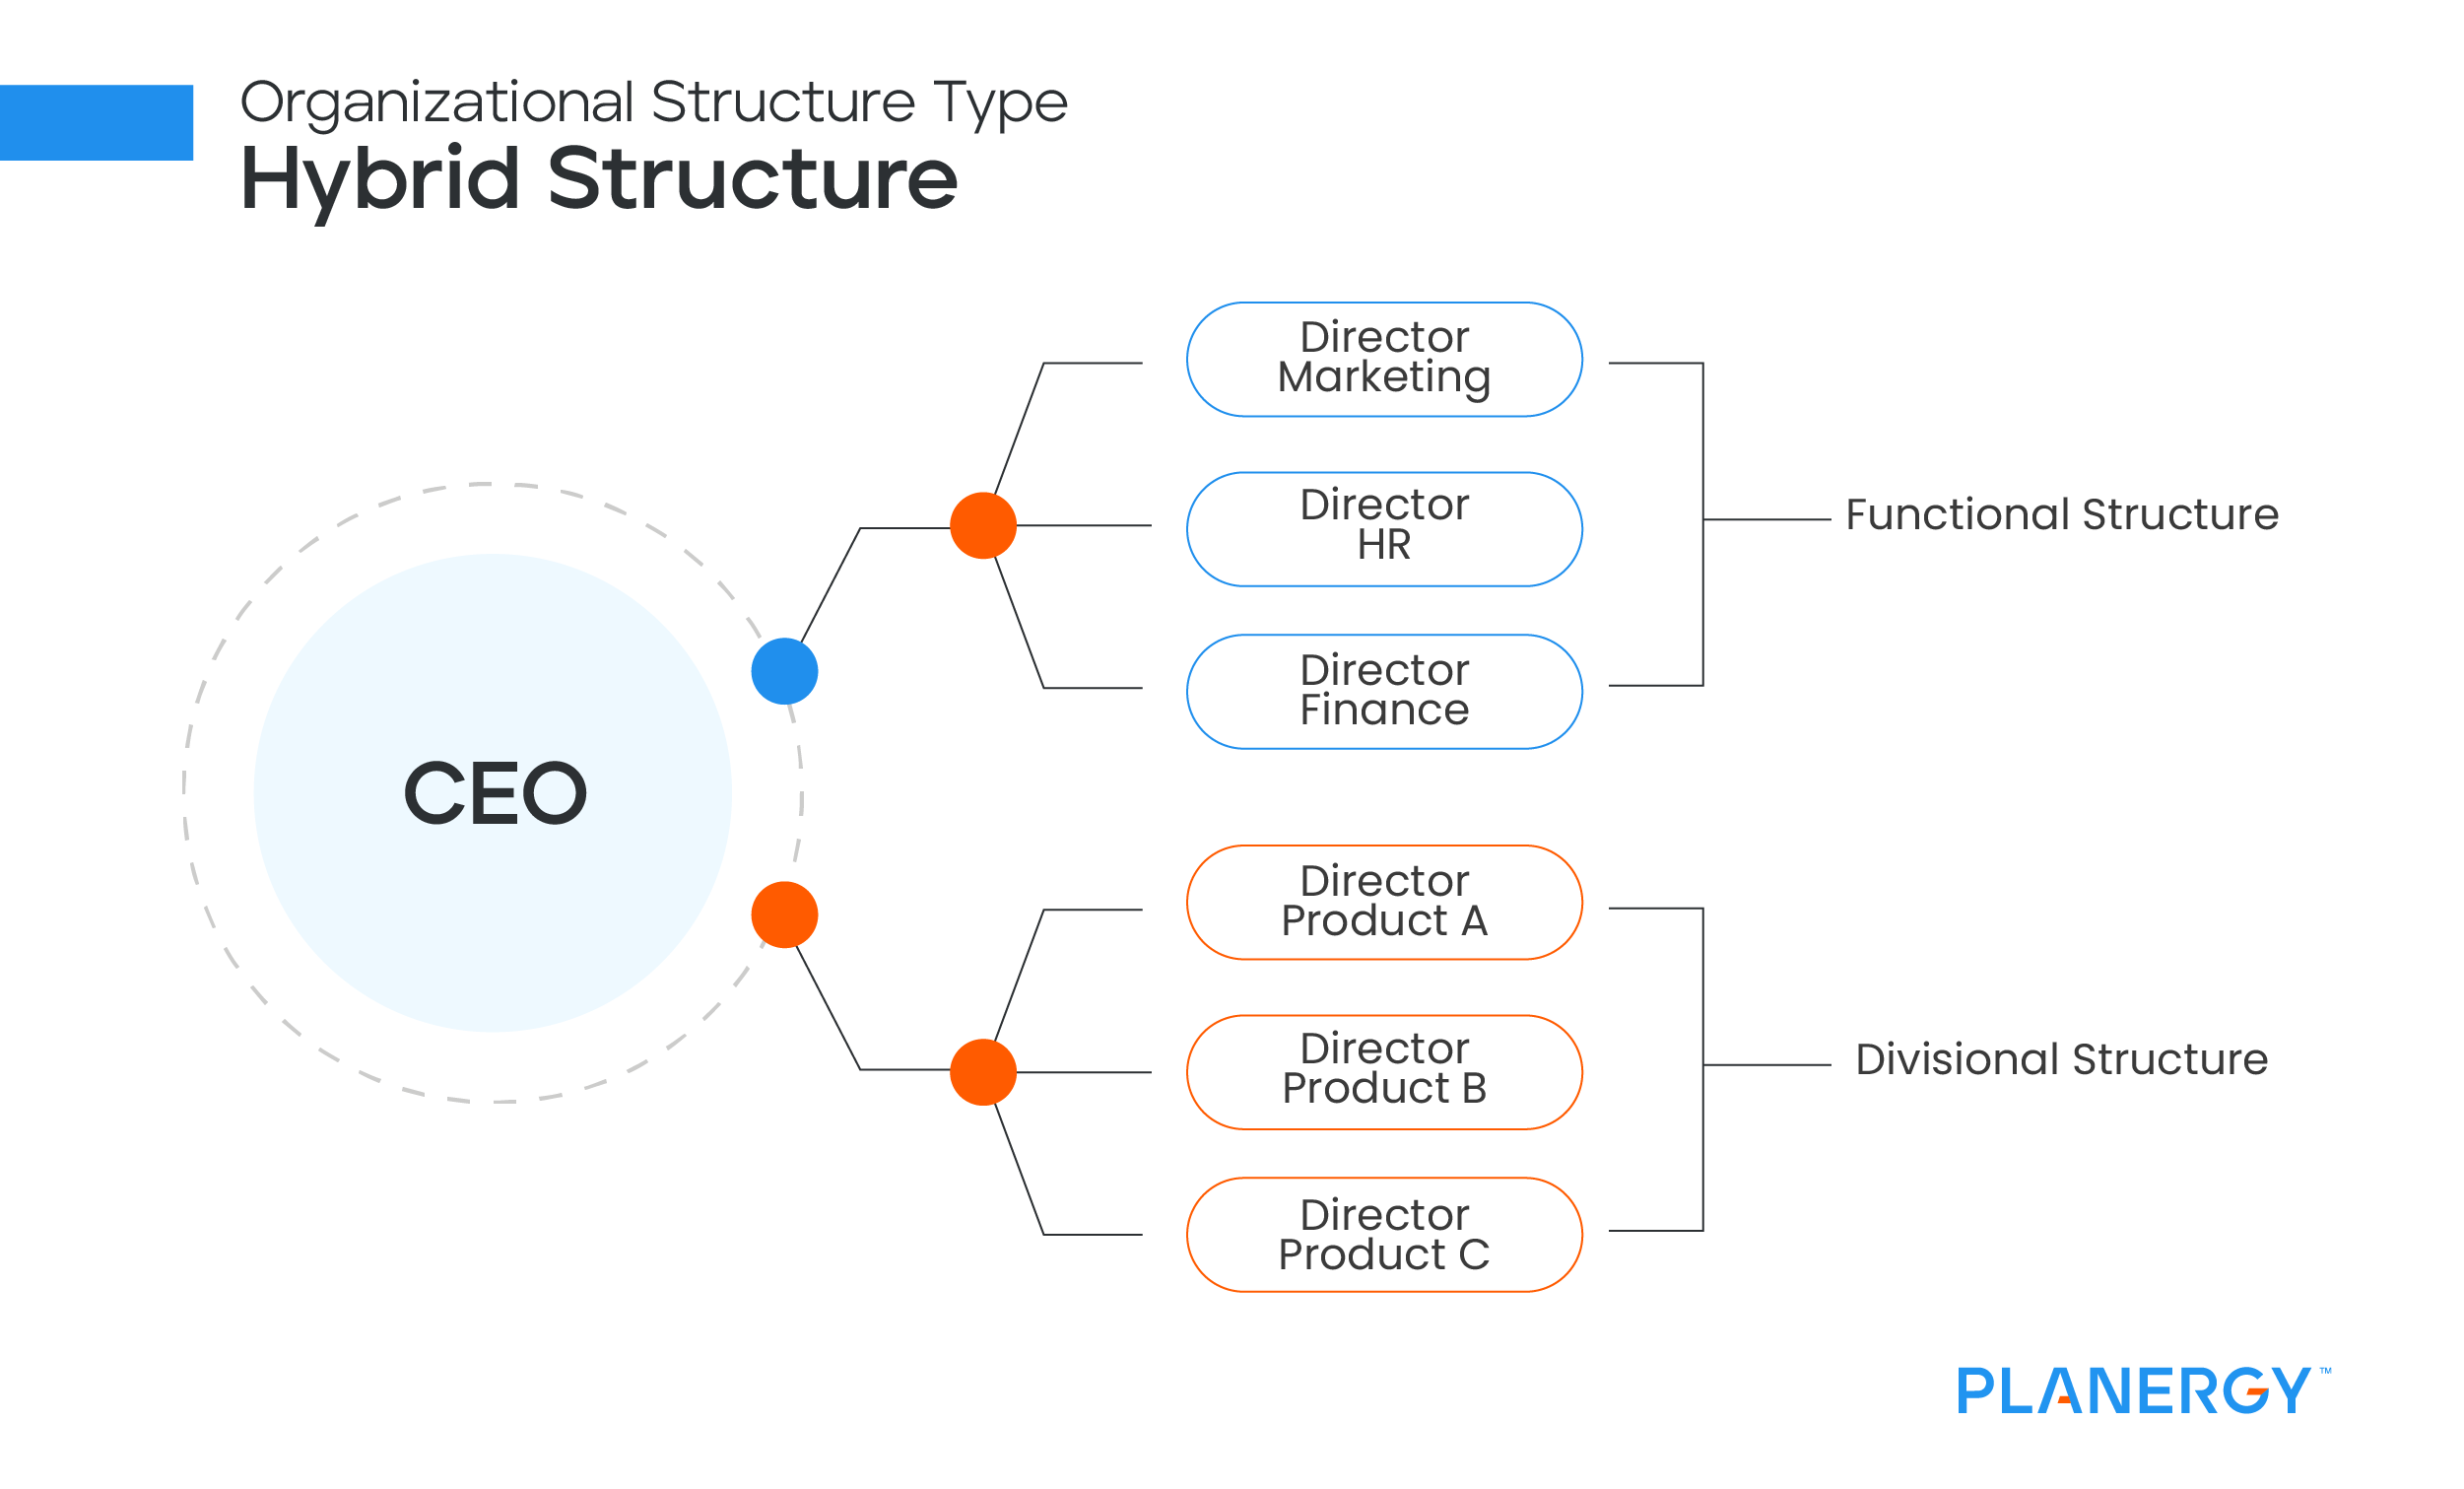 Hybrid organizational structure